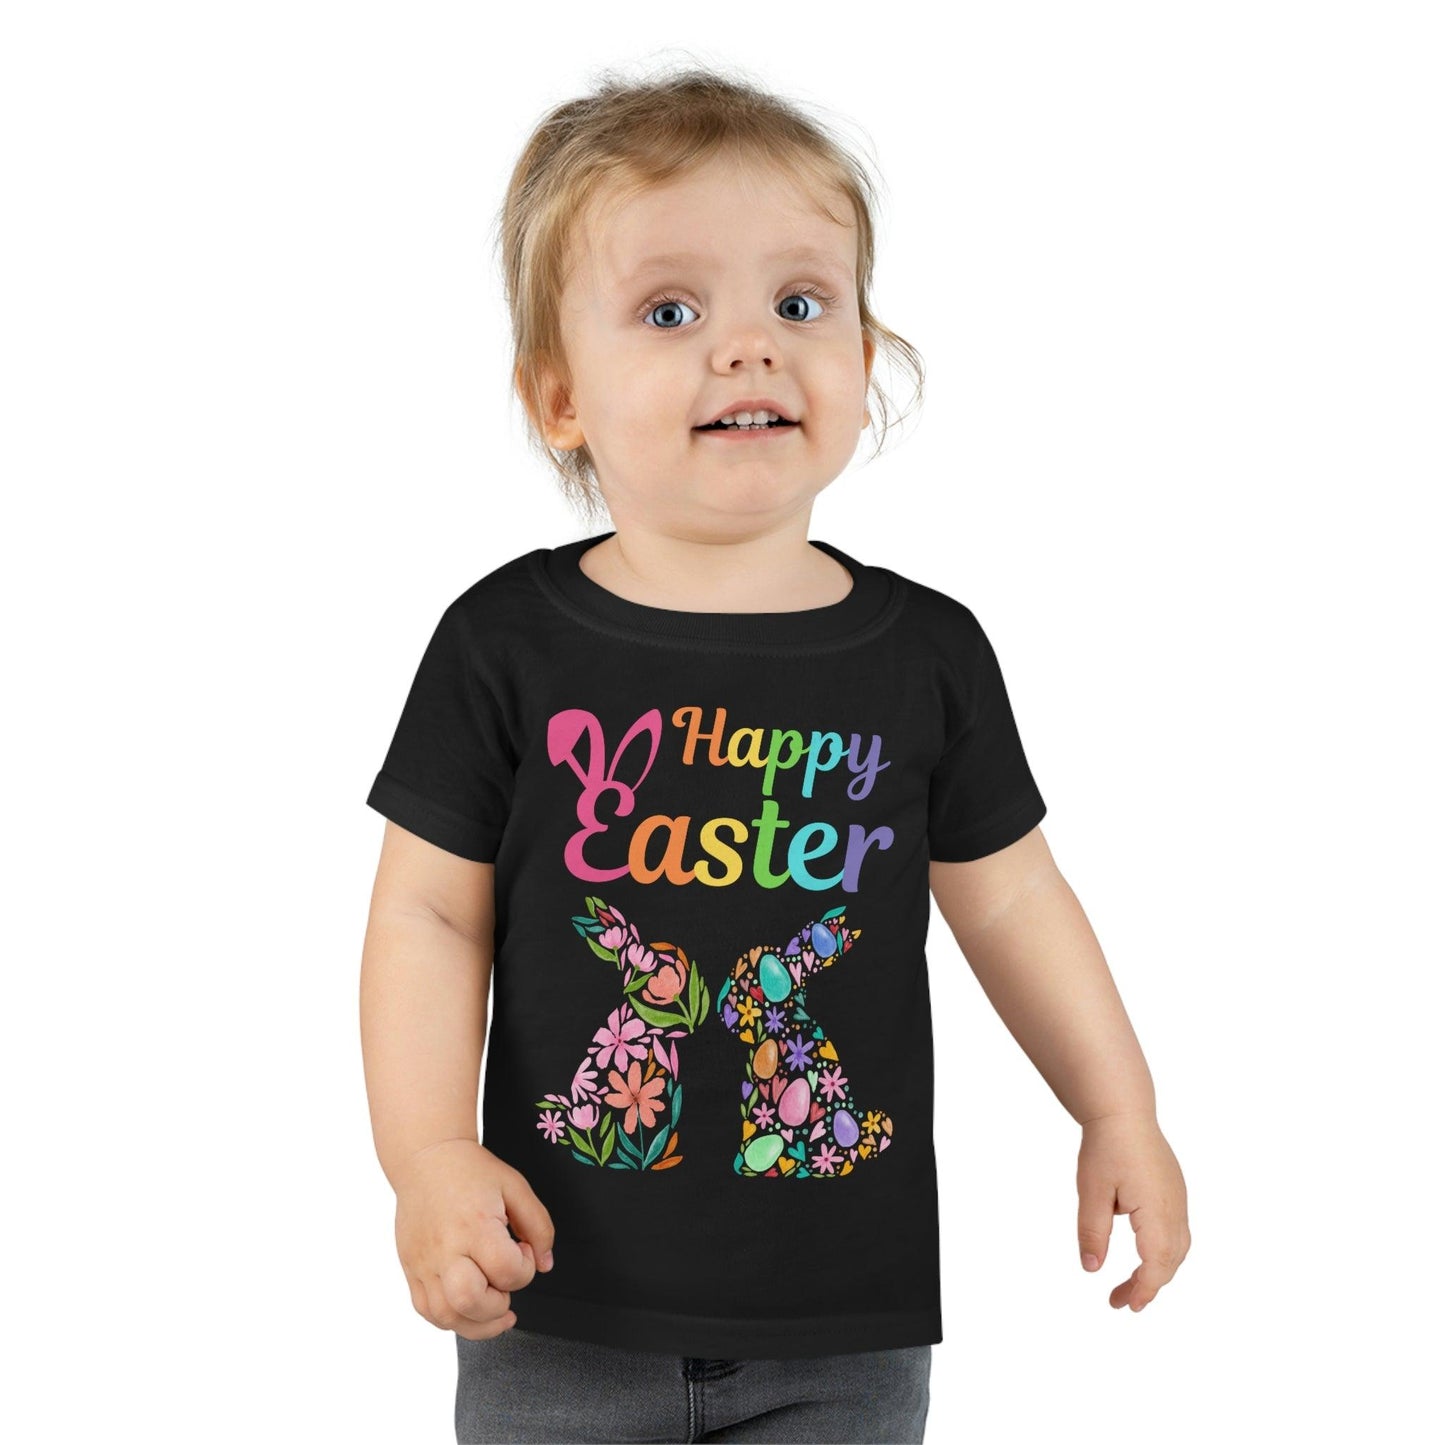 Baby girl easter shirt Baby boy easter shirt, toddler easter T-shirt baby easter outfit for first communion gift